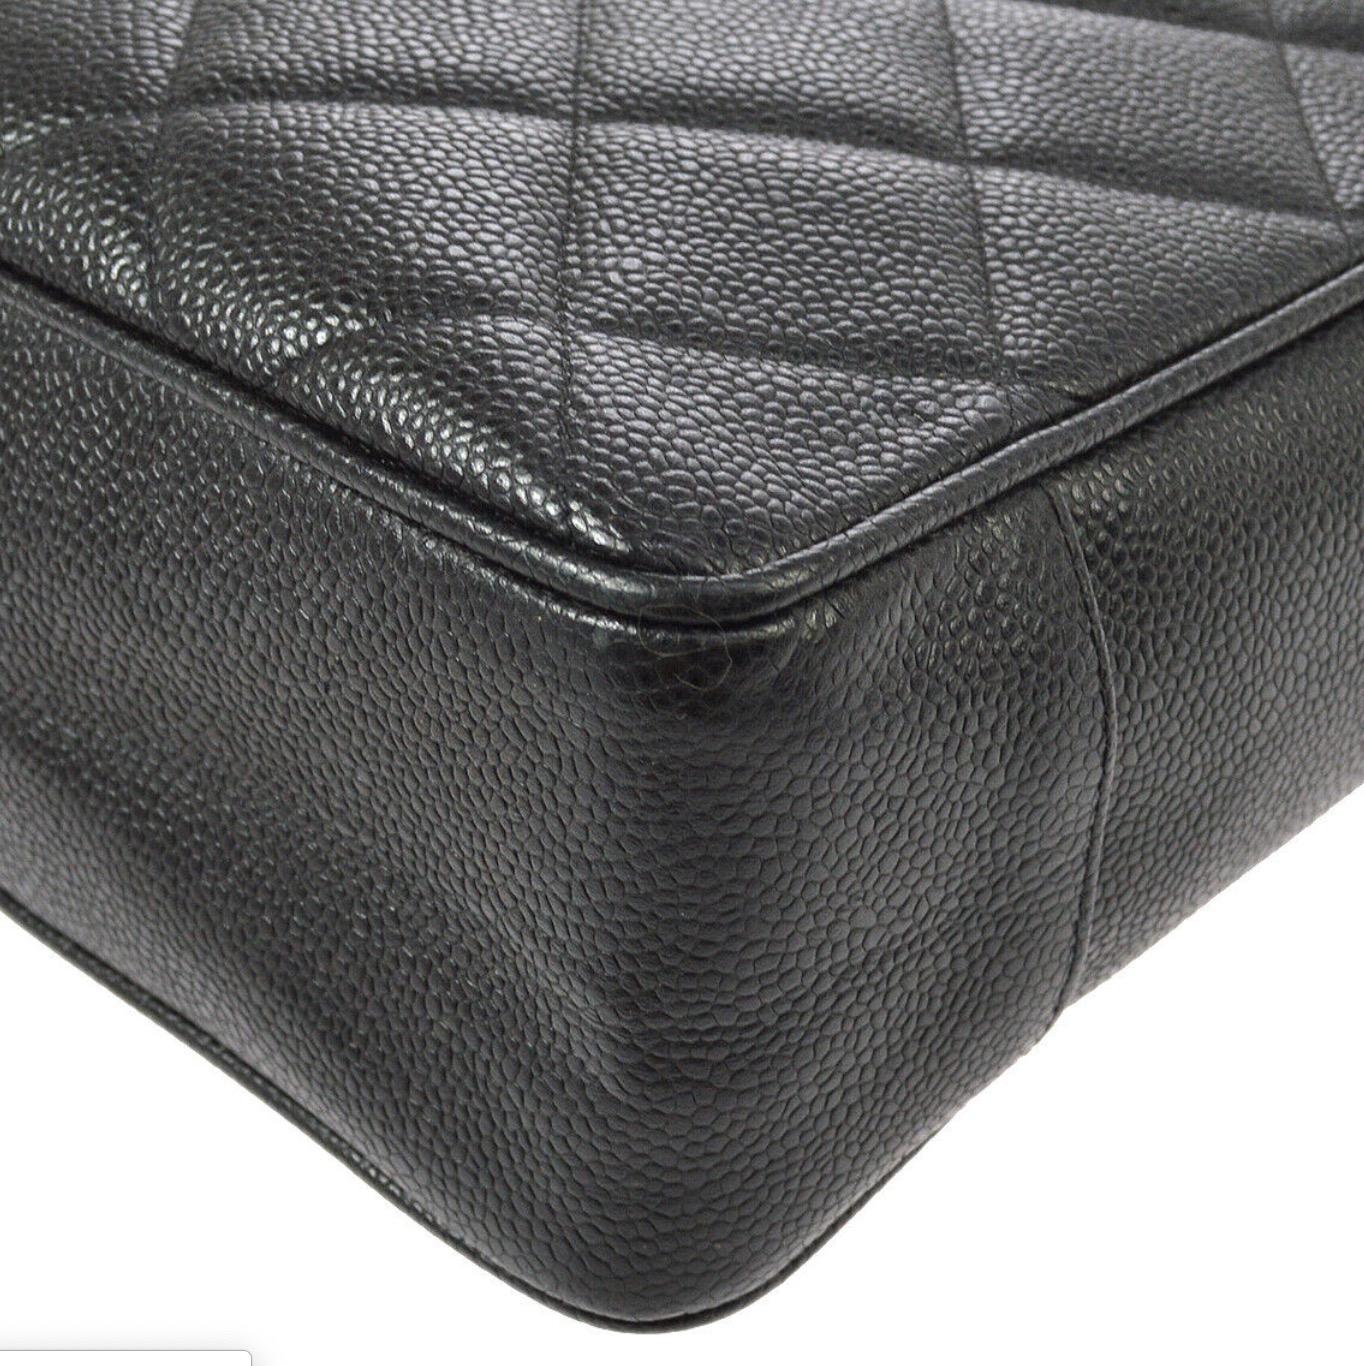 Chanel Black Leather Caviar Gold Chain Shopper Carryall Shoulder Tote Bag 2